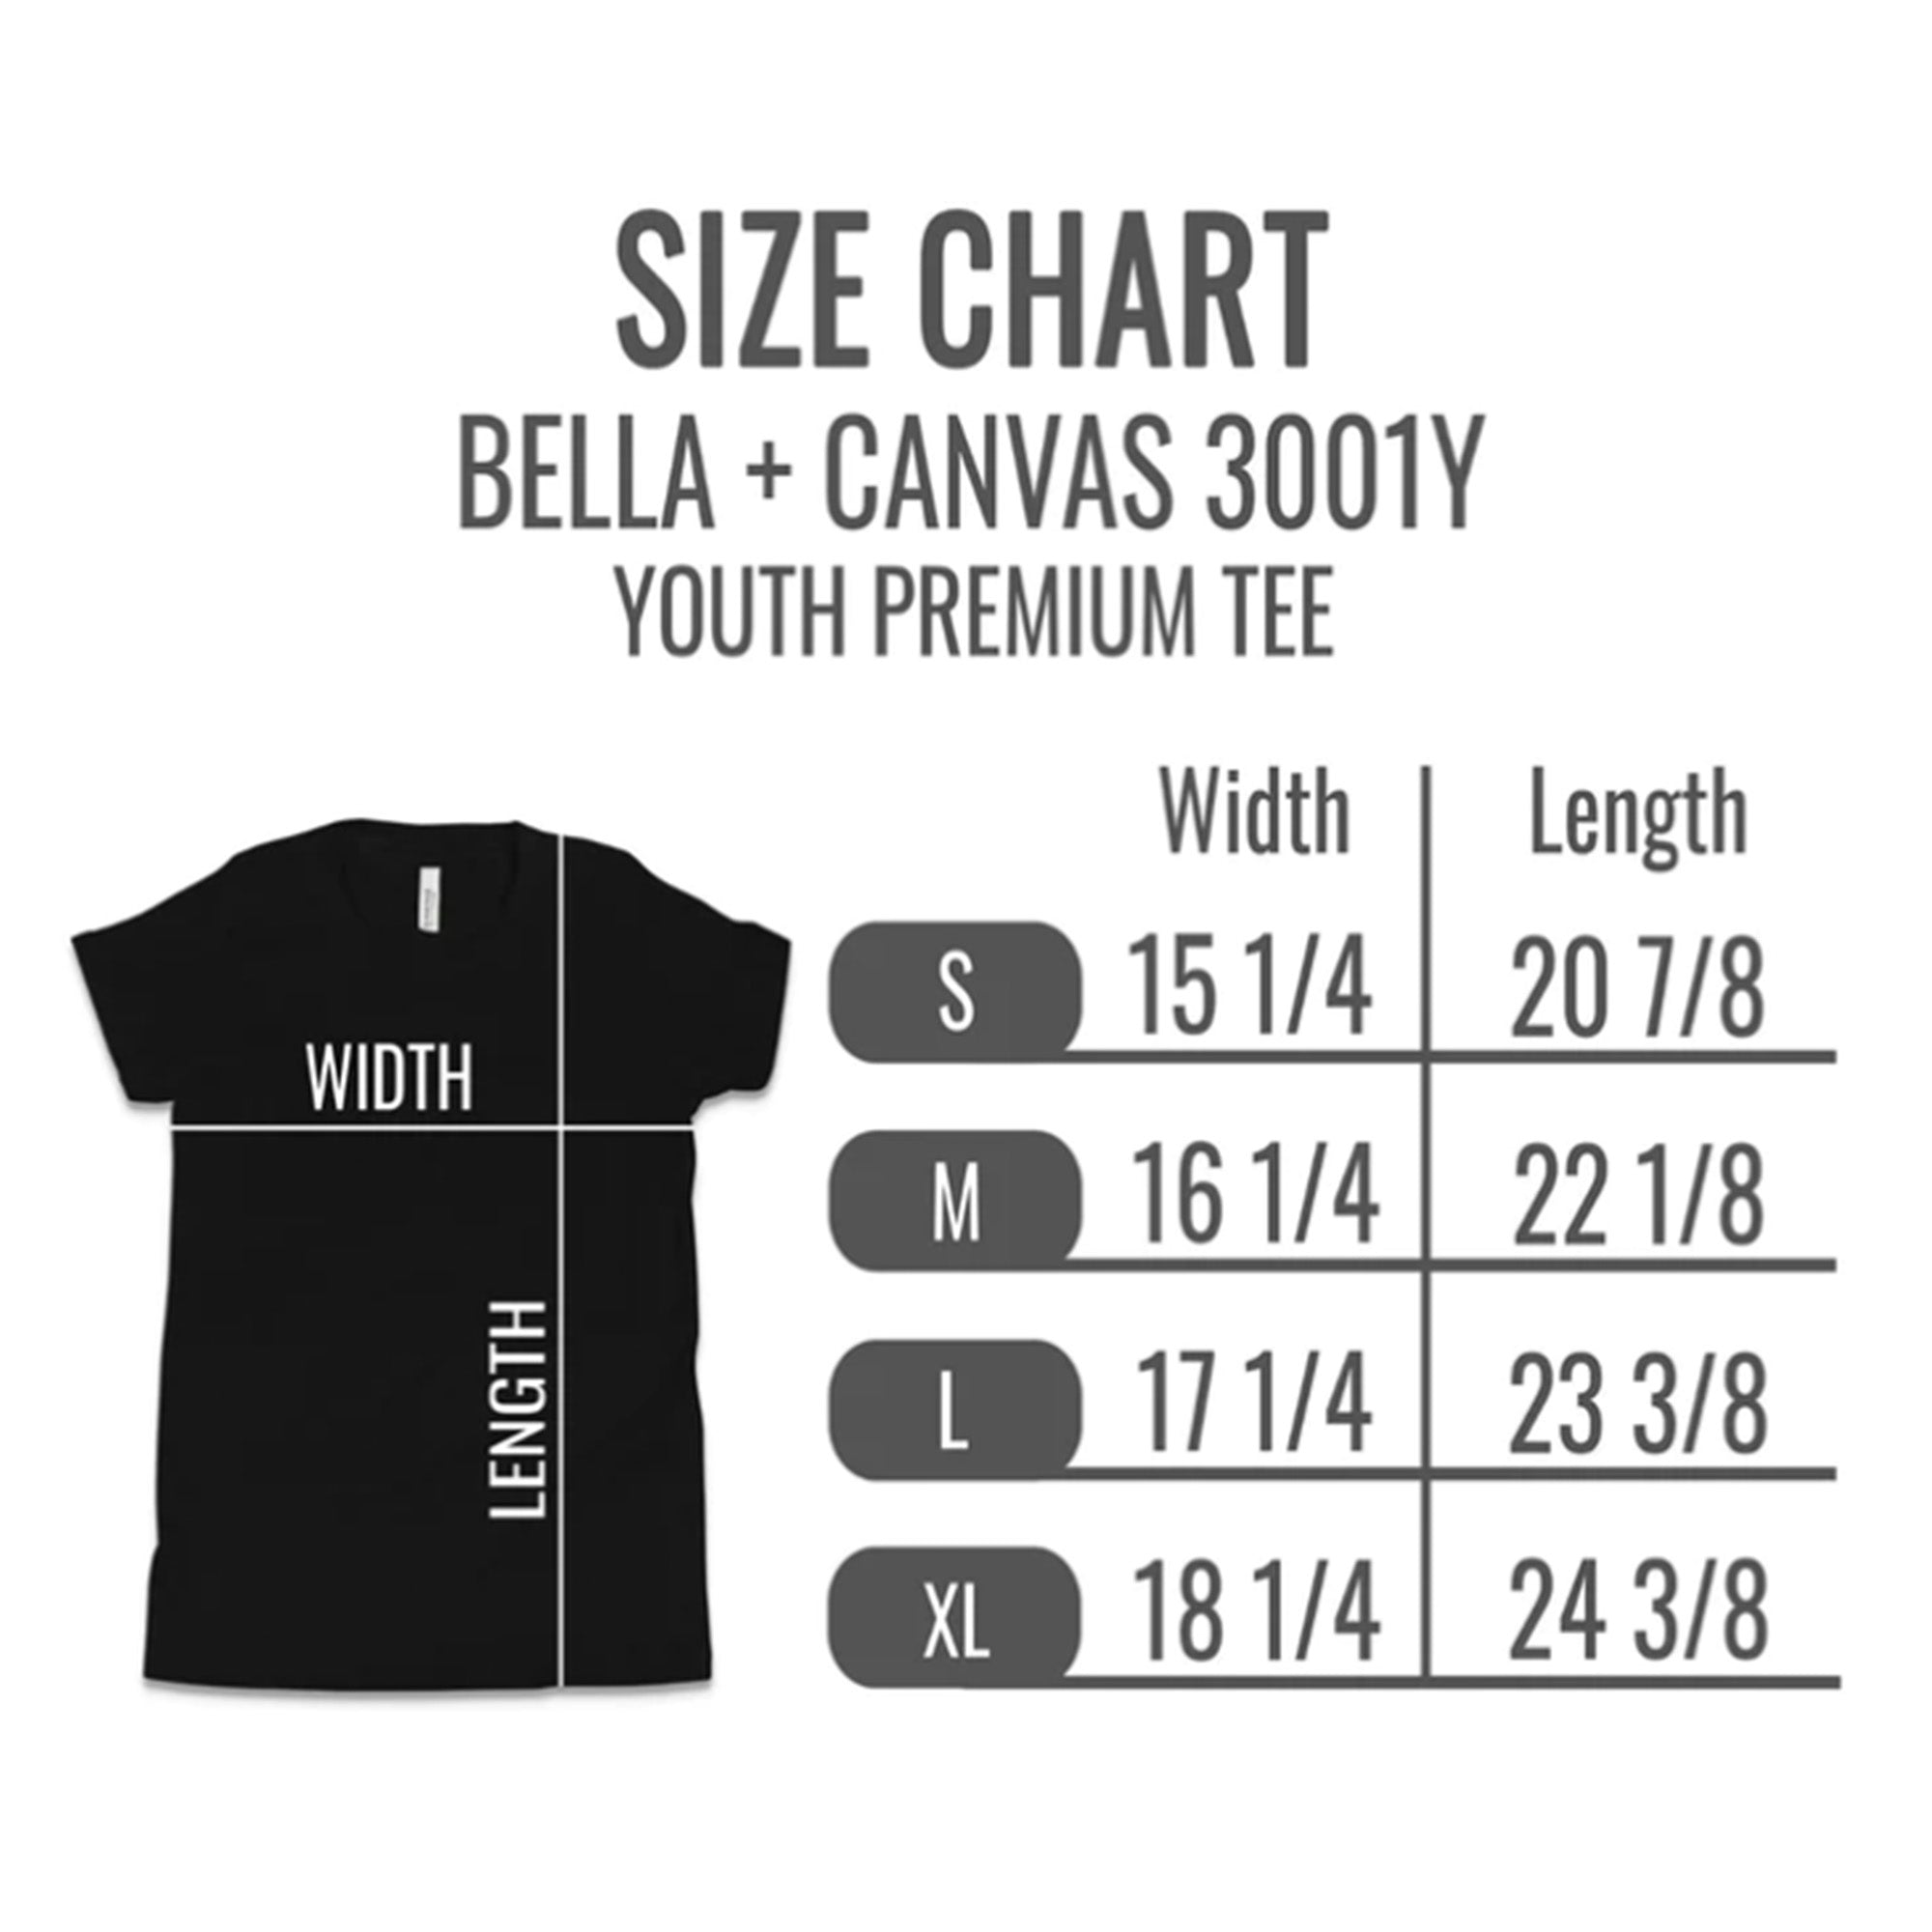 size chart kids Voodoo Teddy Shirt AJ 1 Low Black White Grey photo